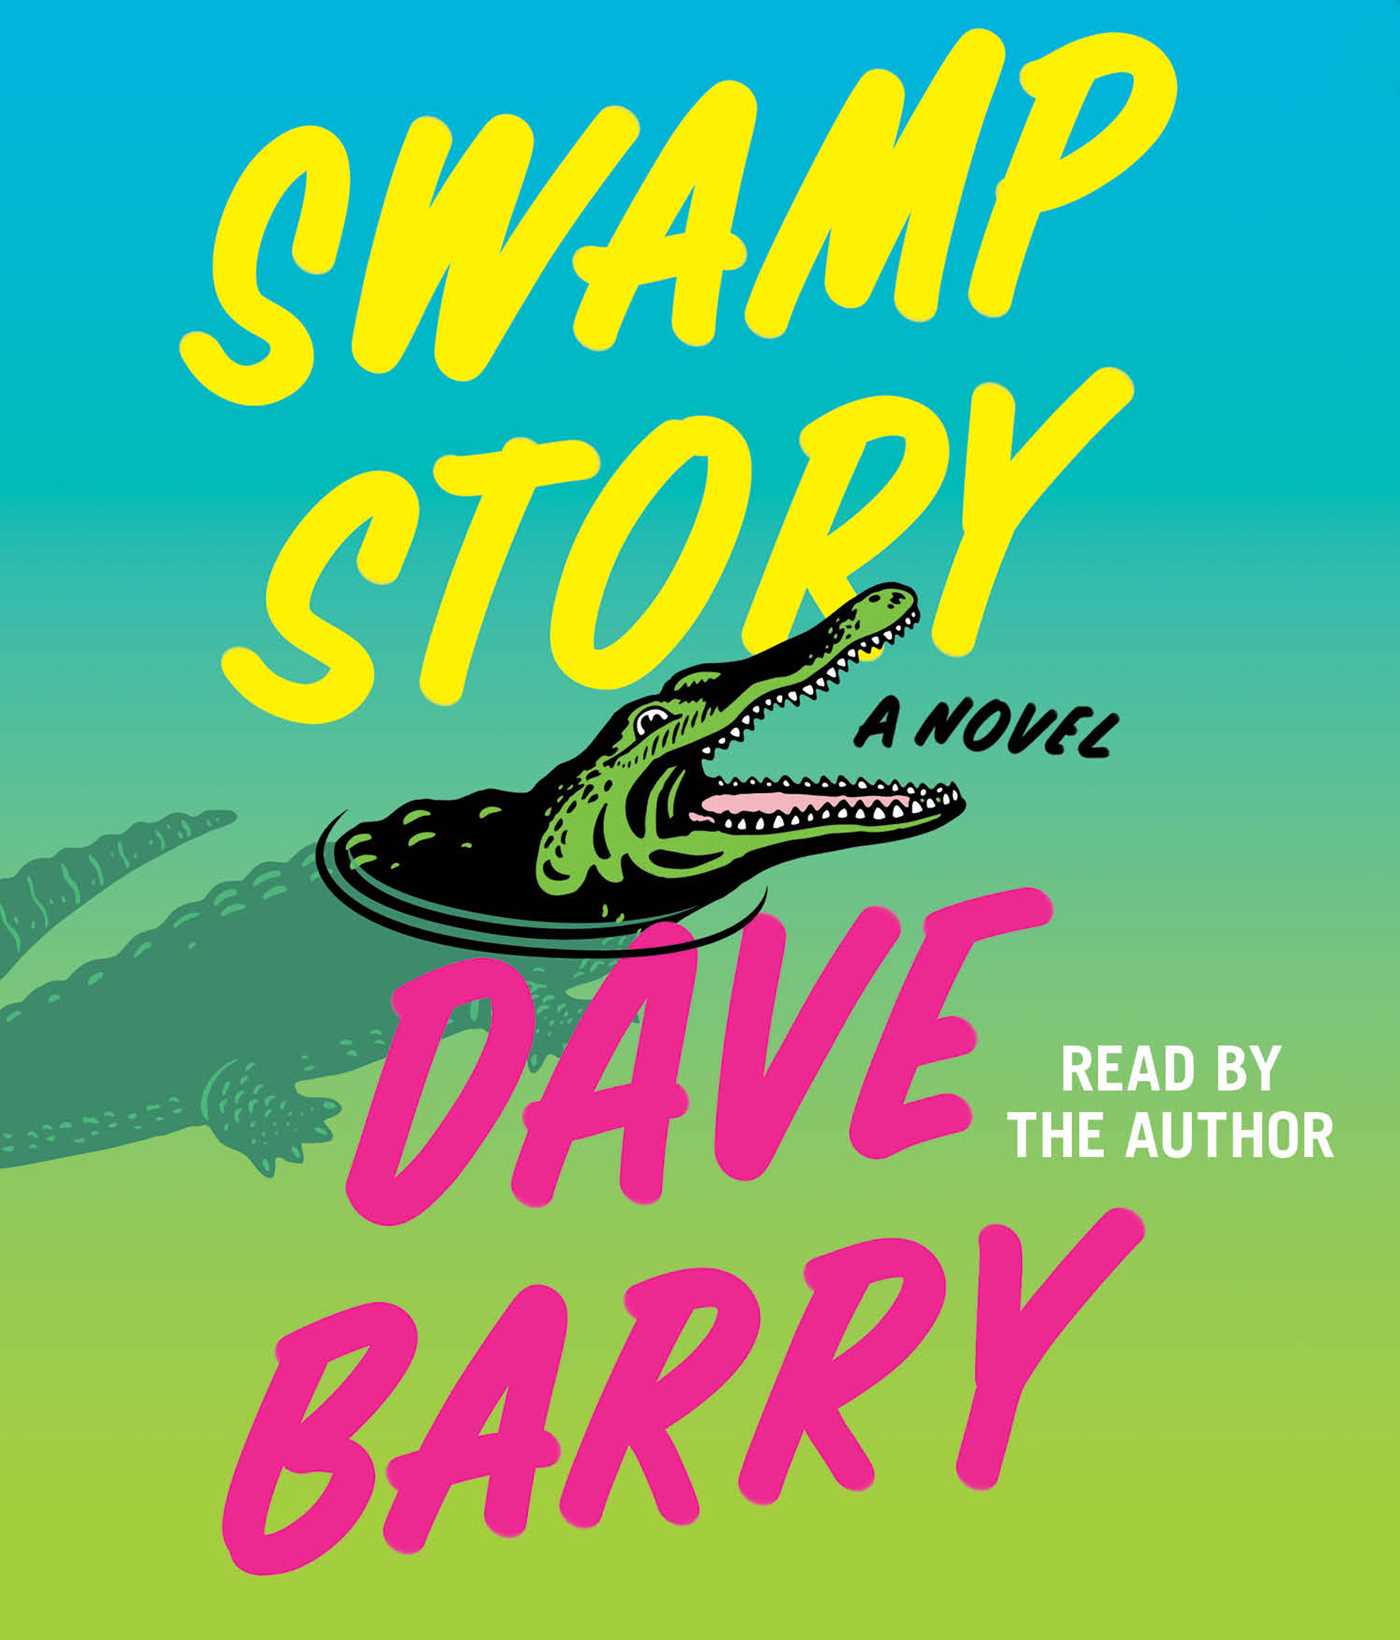 Swamp Story: A Novel